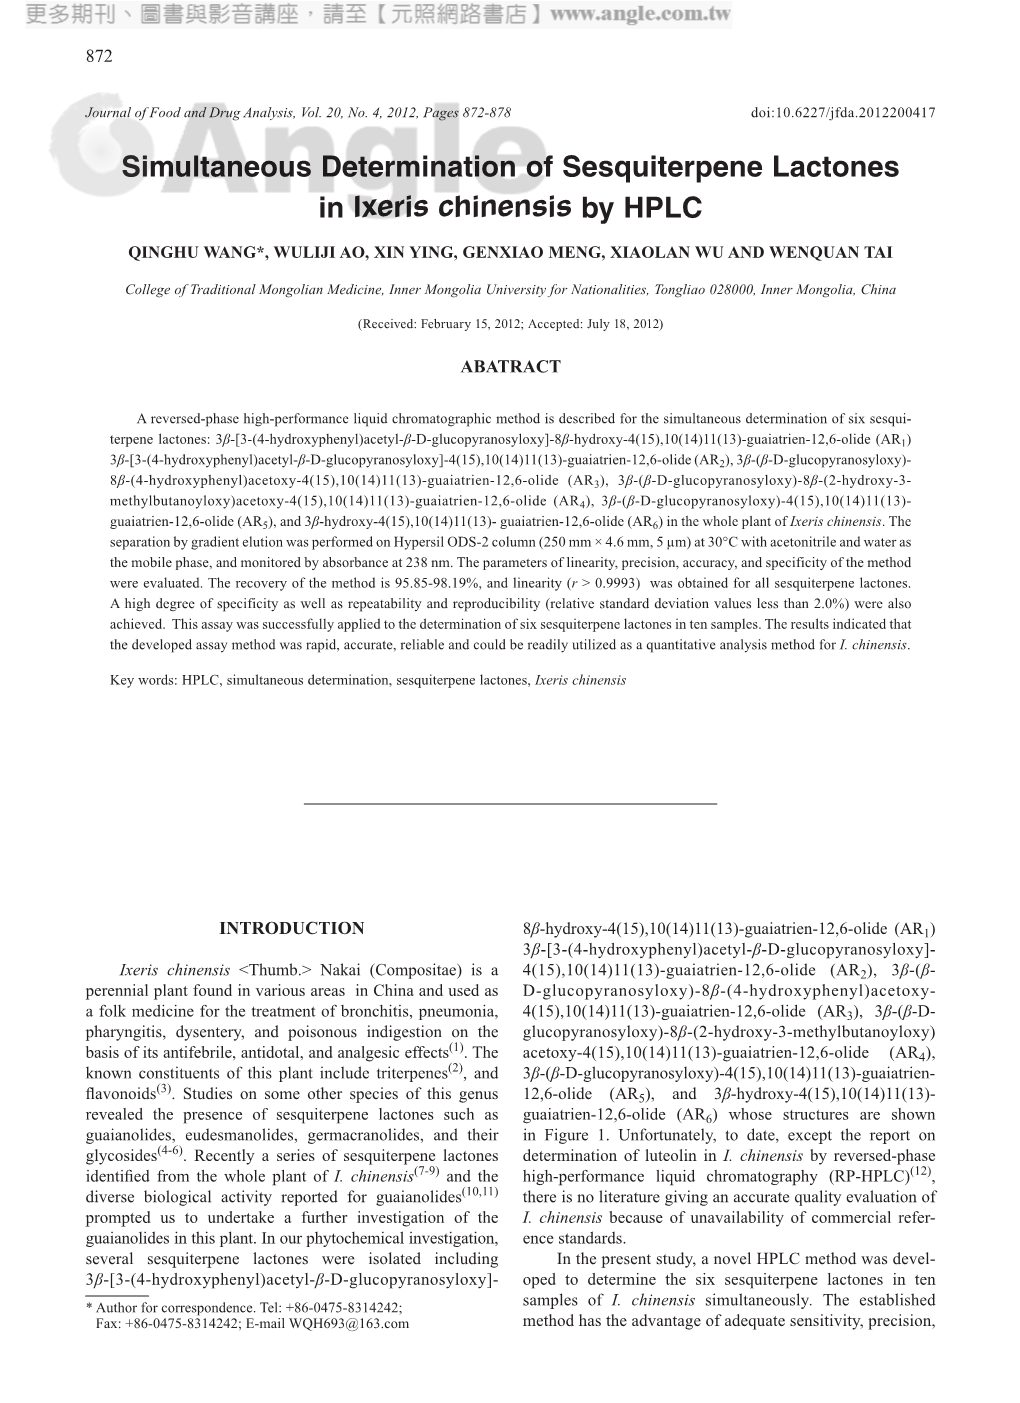 Simultaneous Determination of Sesquiterpene Lactones in Ixeris Chinensis by HPLC